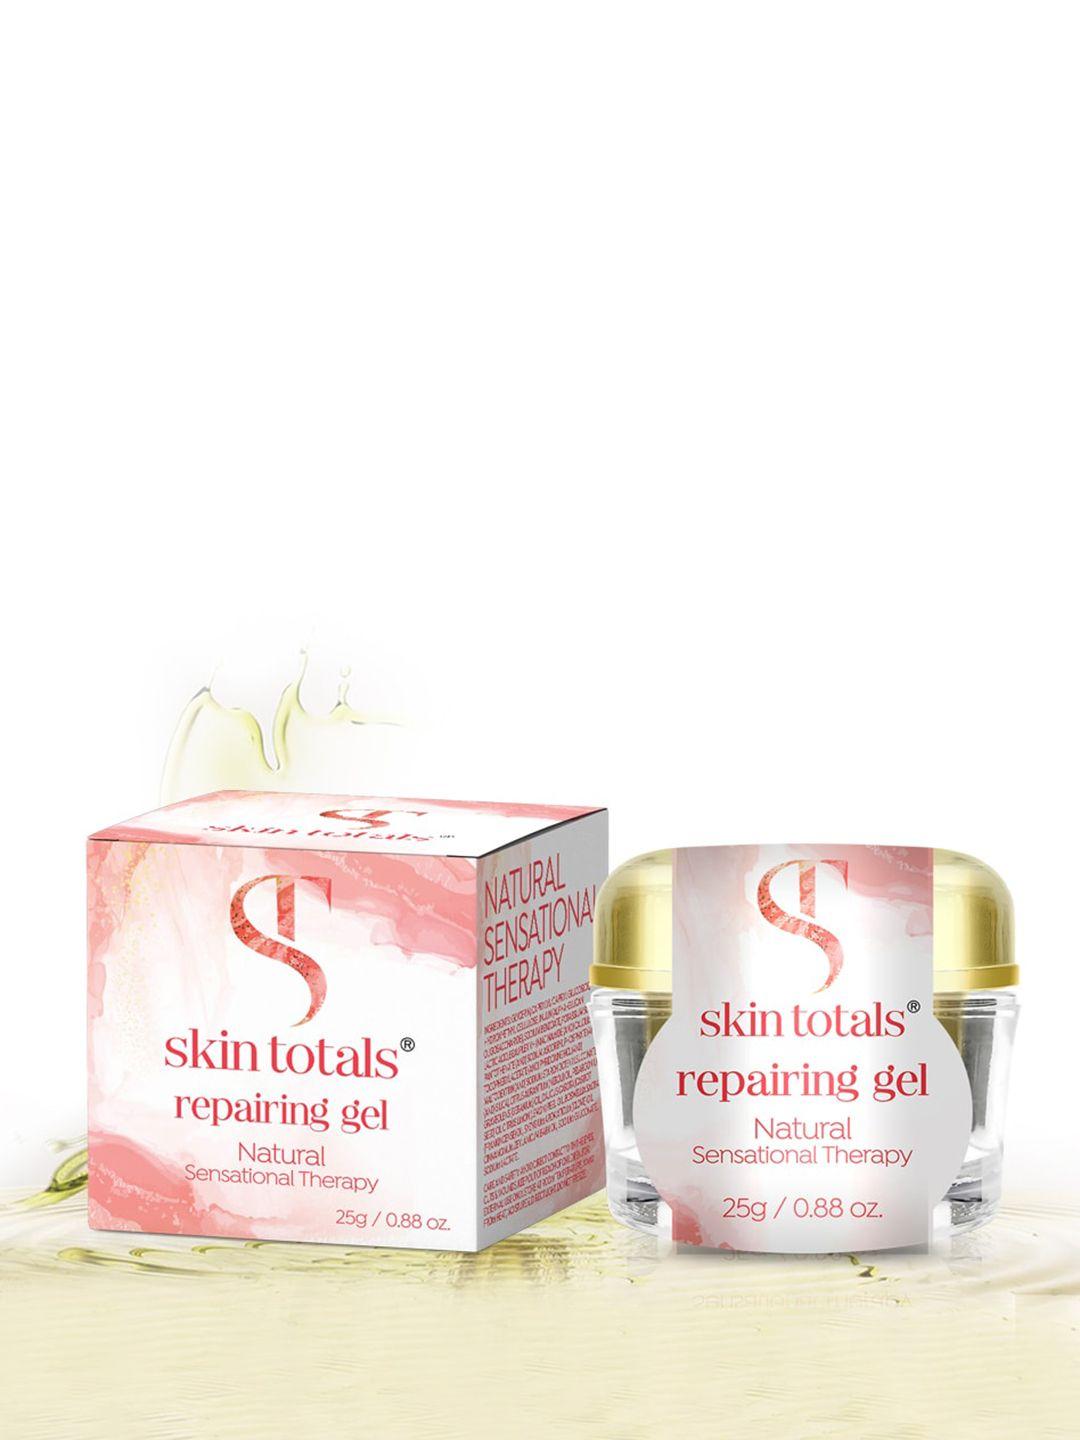 beautyrelay london skin totals repairing gel for natural sensational therapy - 25g